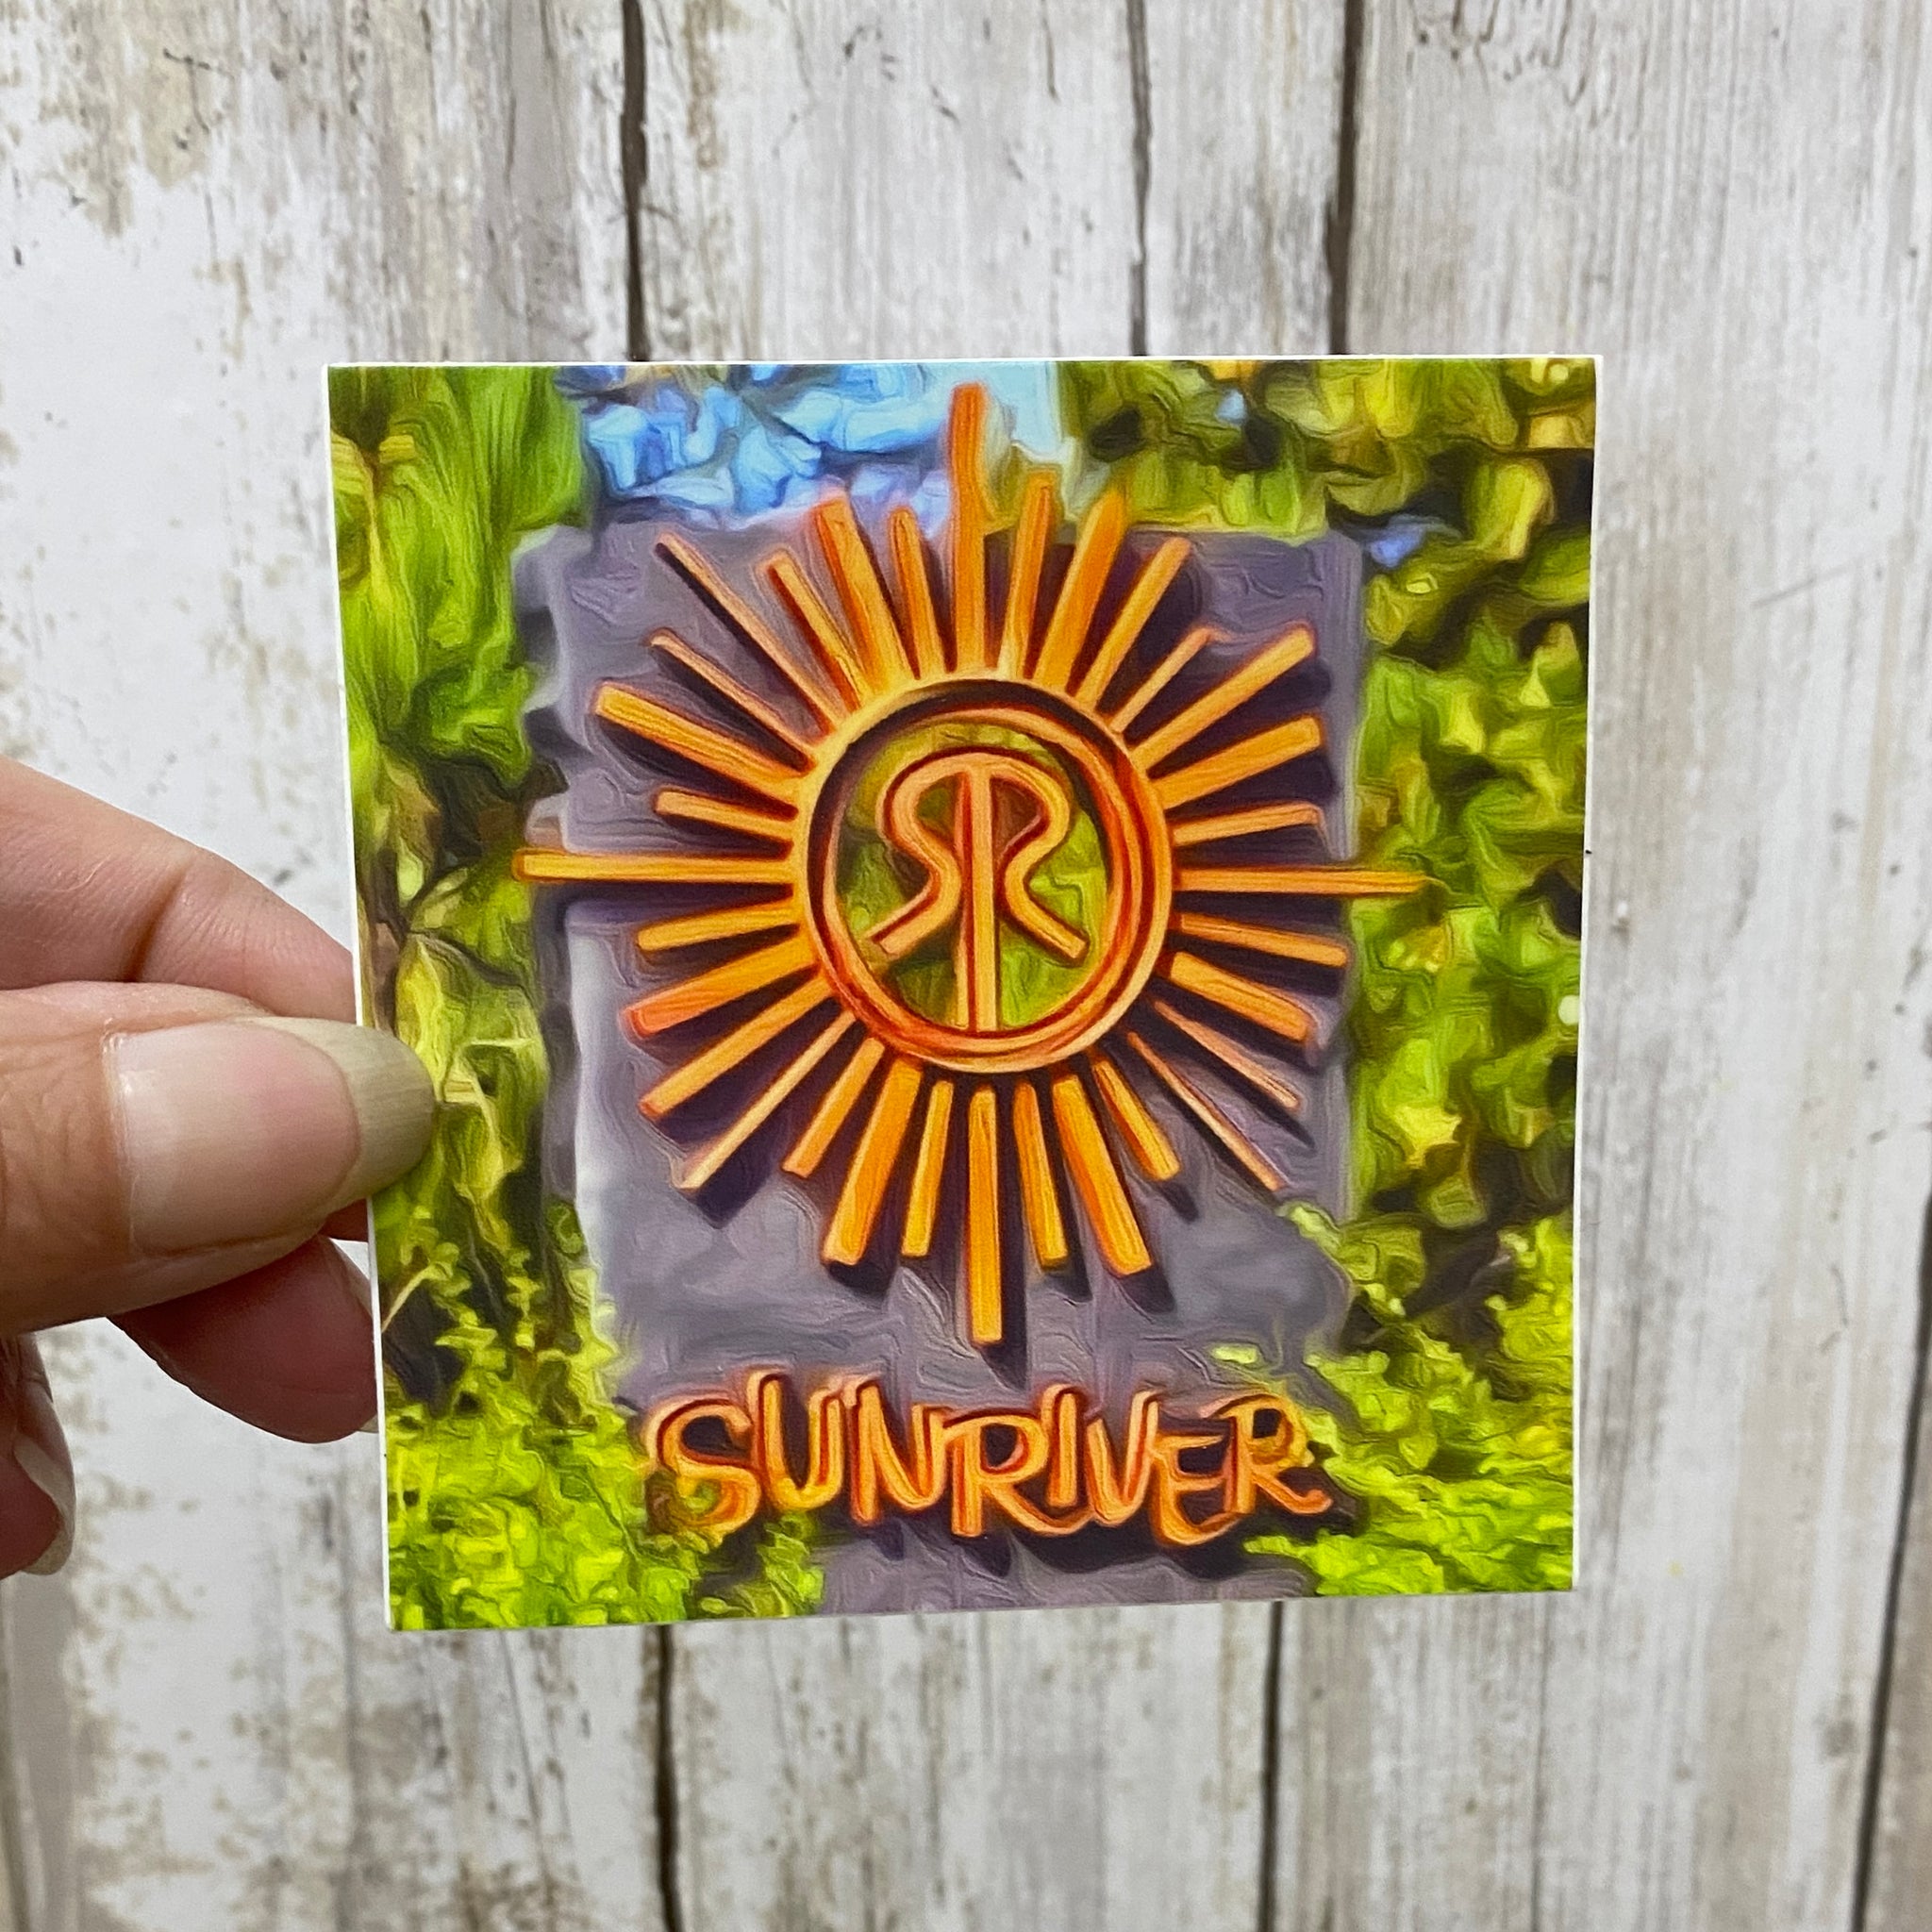 Sunriver Round-About Waterfall Logo Vinyl Sticker - Created by Vivian Houser